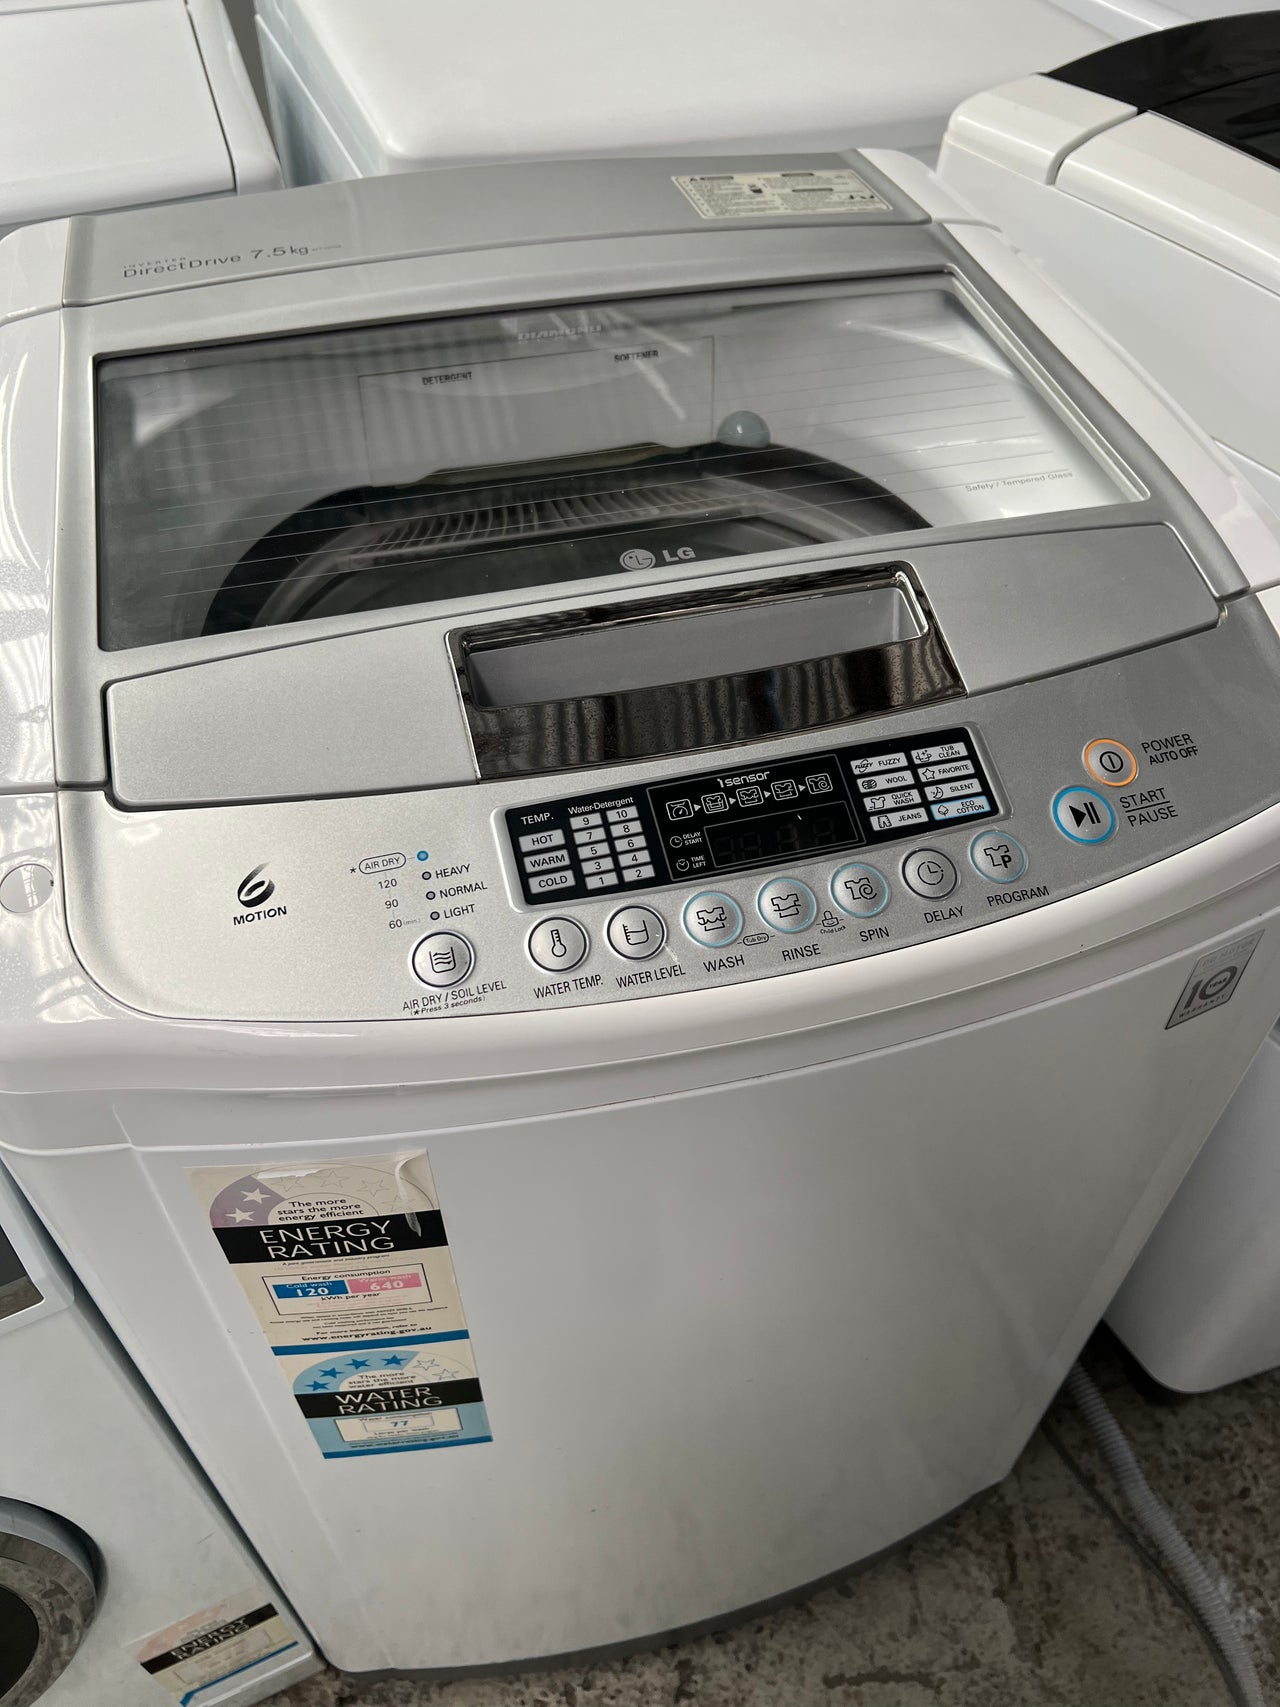 Second hand LG WTH750 7.5kg Top Load Washing Machine - Second Hand Appliances Geebung